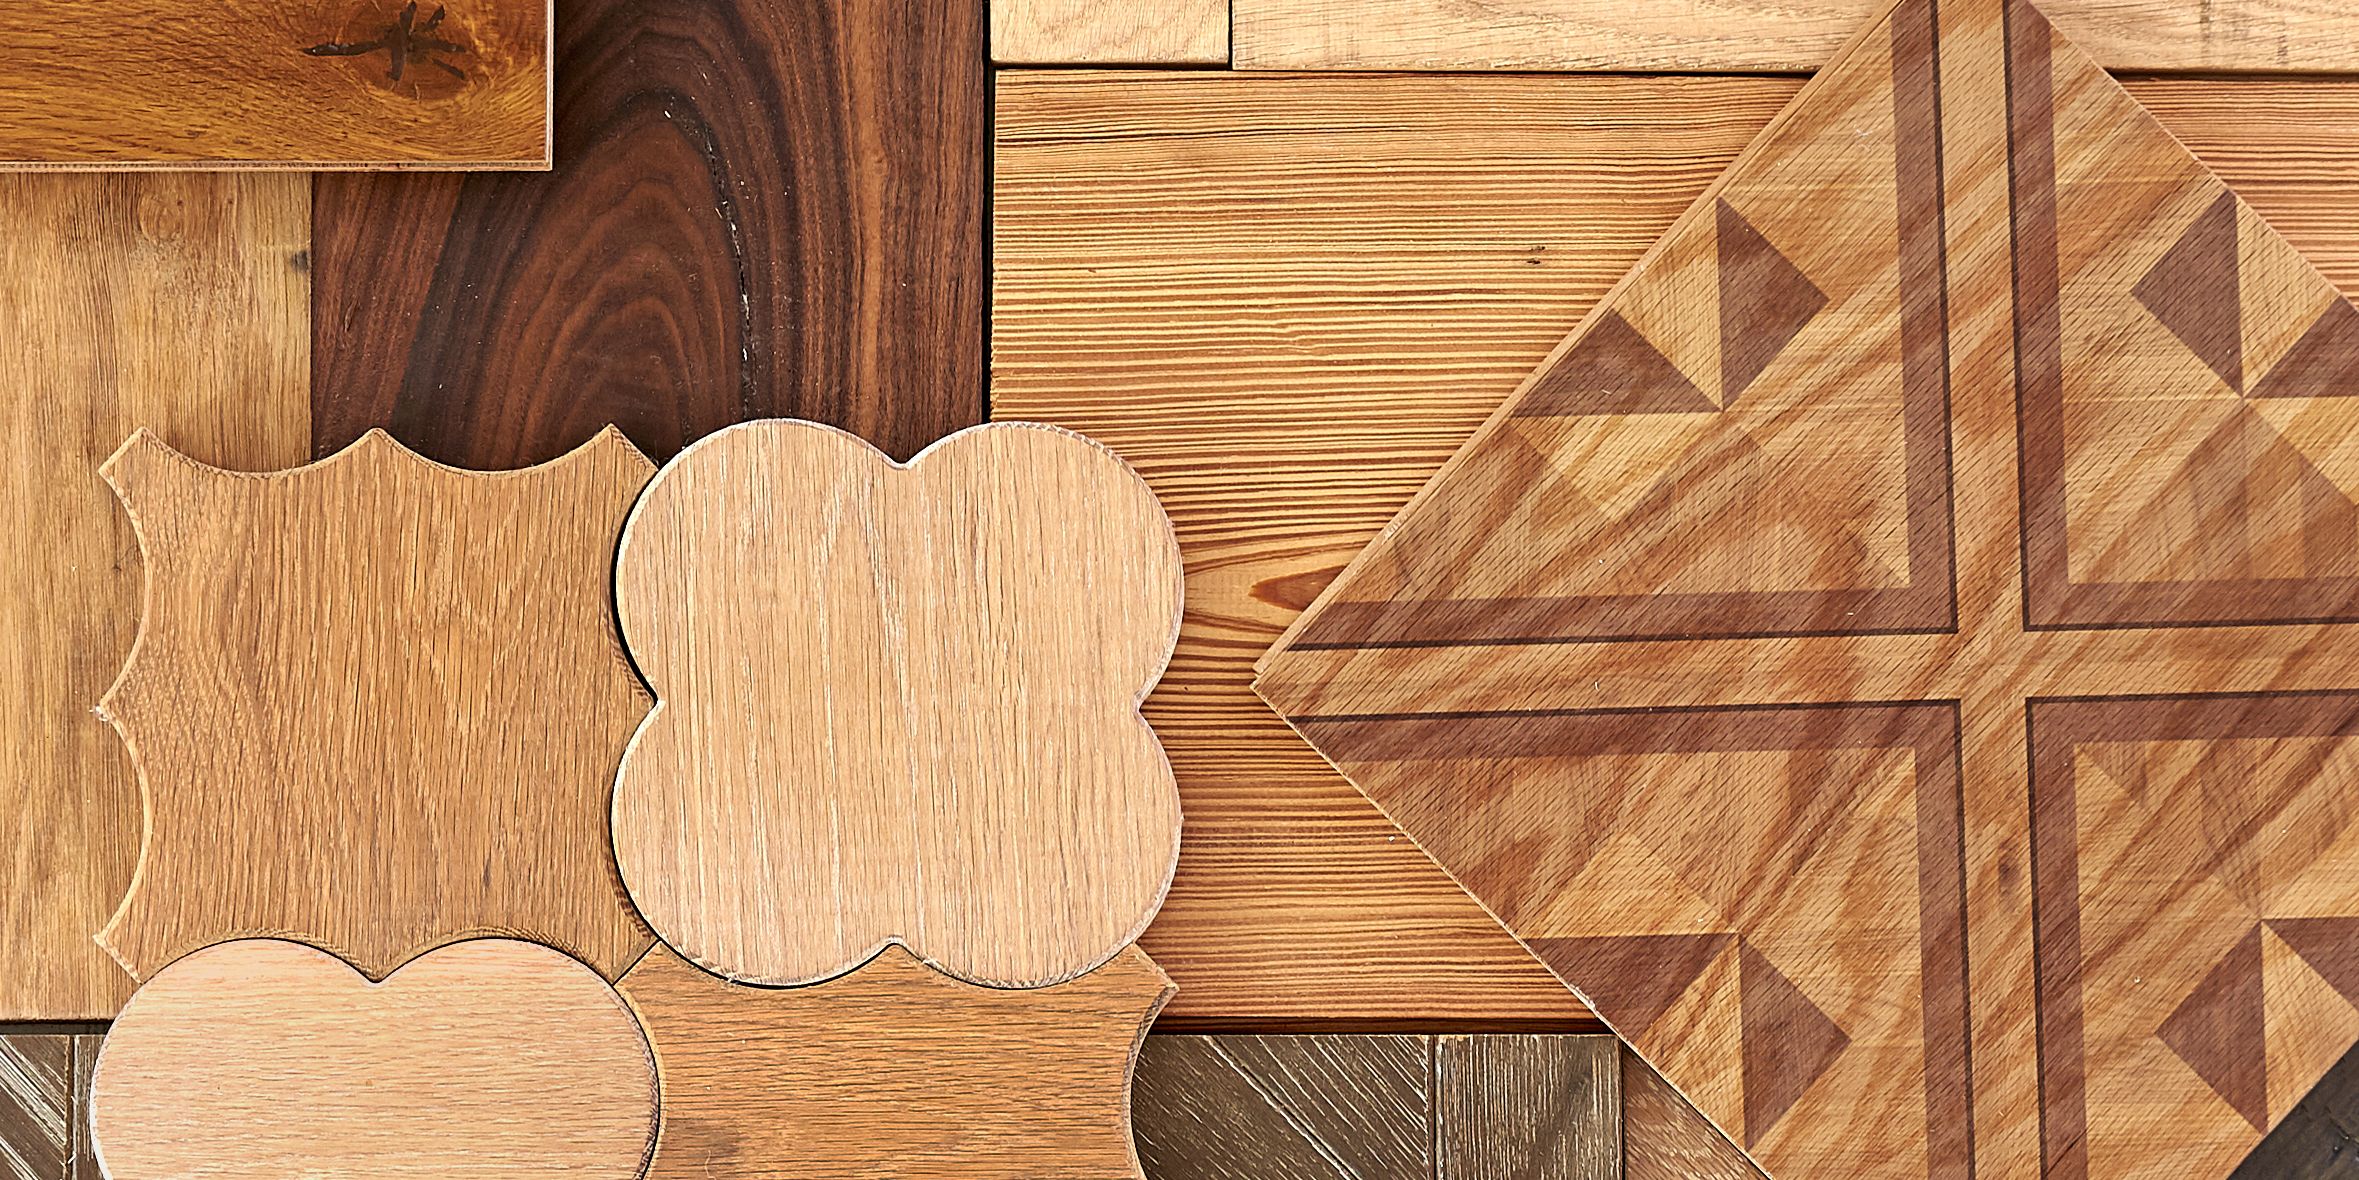 Hardwood Flooring Cost Types Of, Hardwood Flooring Options And Cost